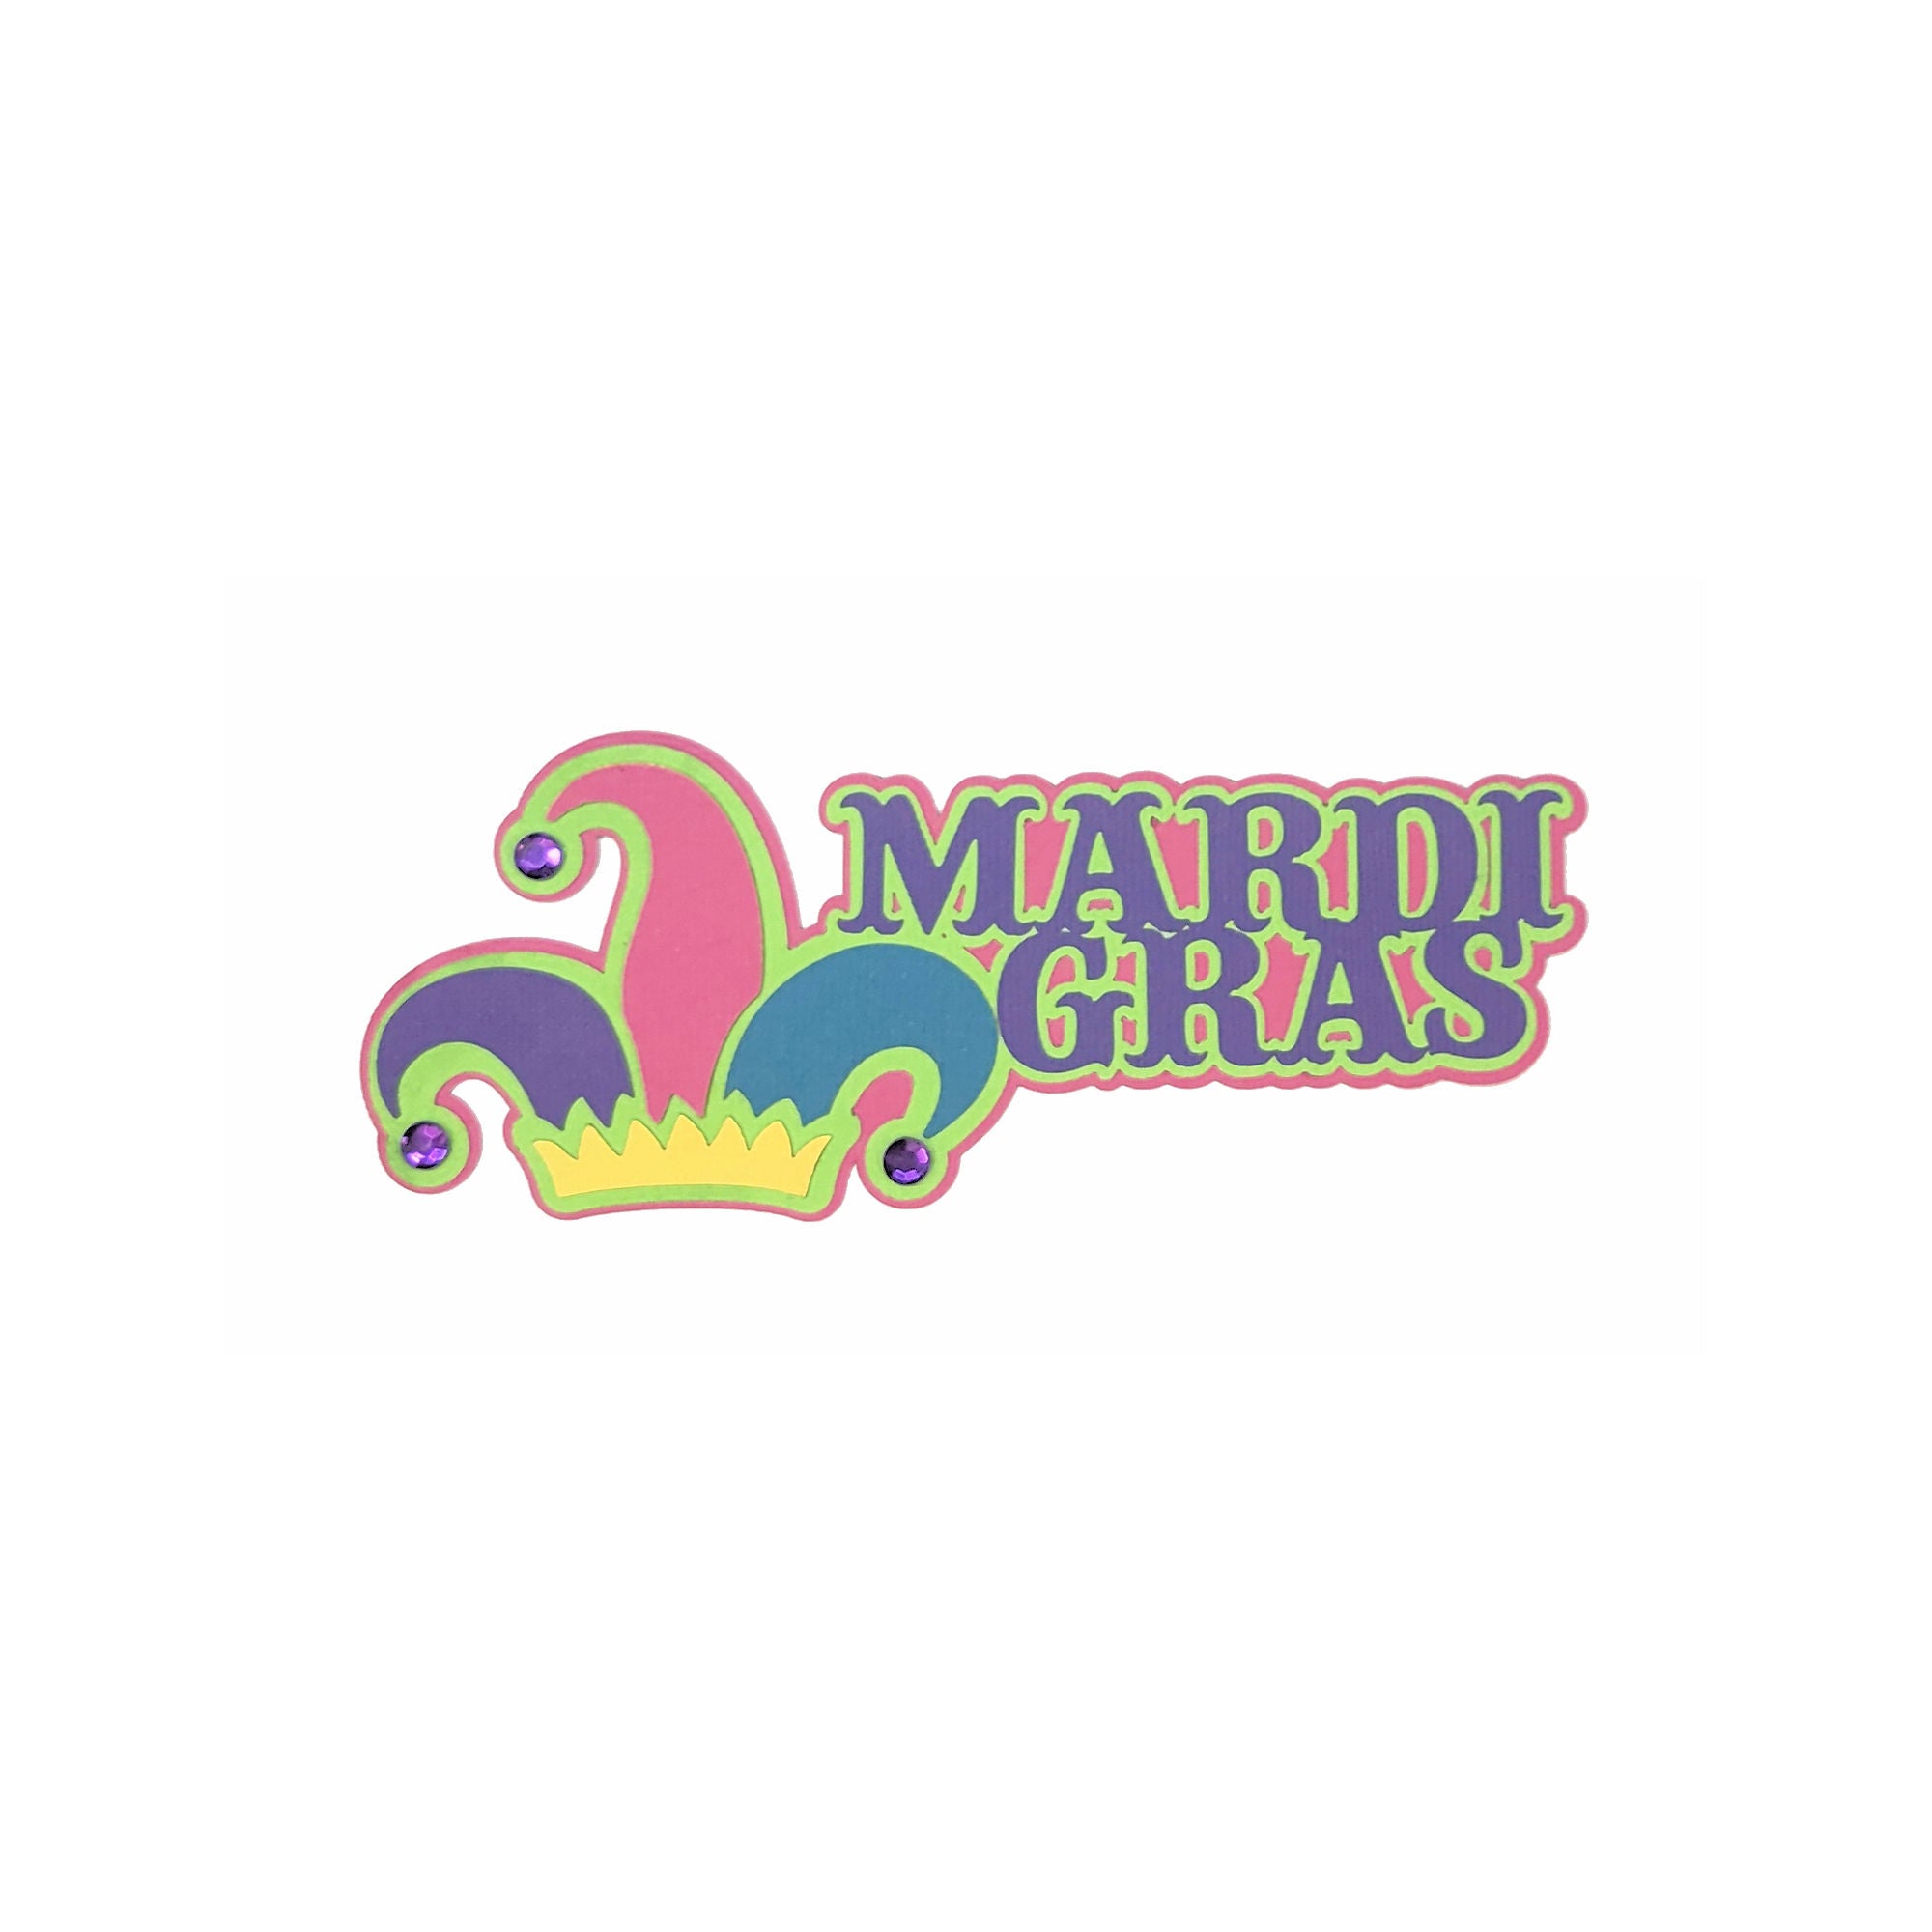 Mardi Gras Title 6 x 2 & Jester Hat Fully-Assembled Laser Cut Scrapbook Embellishment by SSC Laser Designs